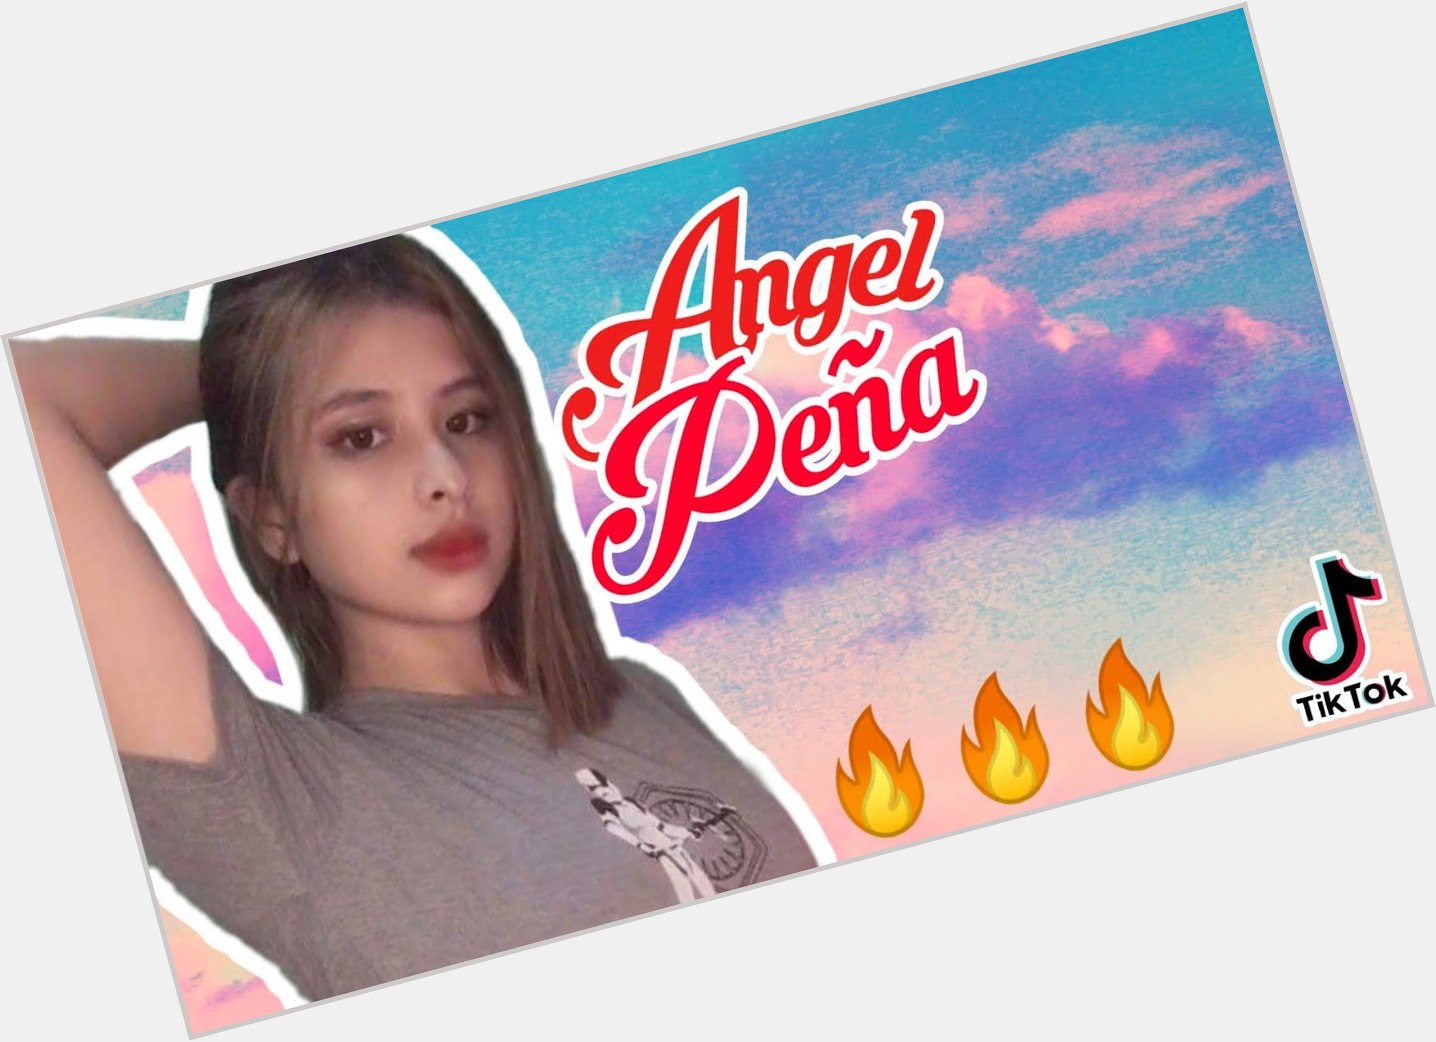 Angel Pena  